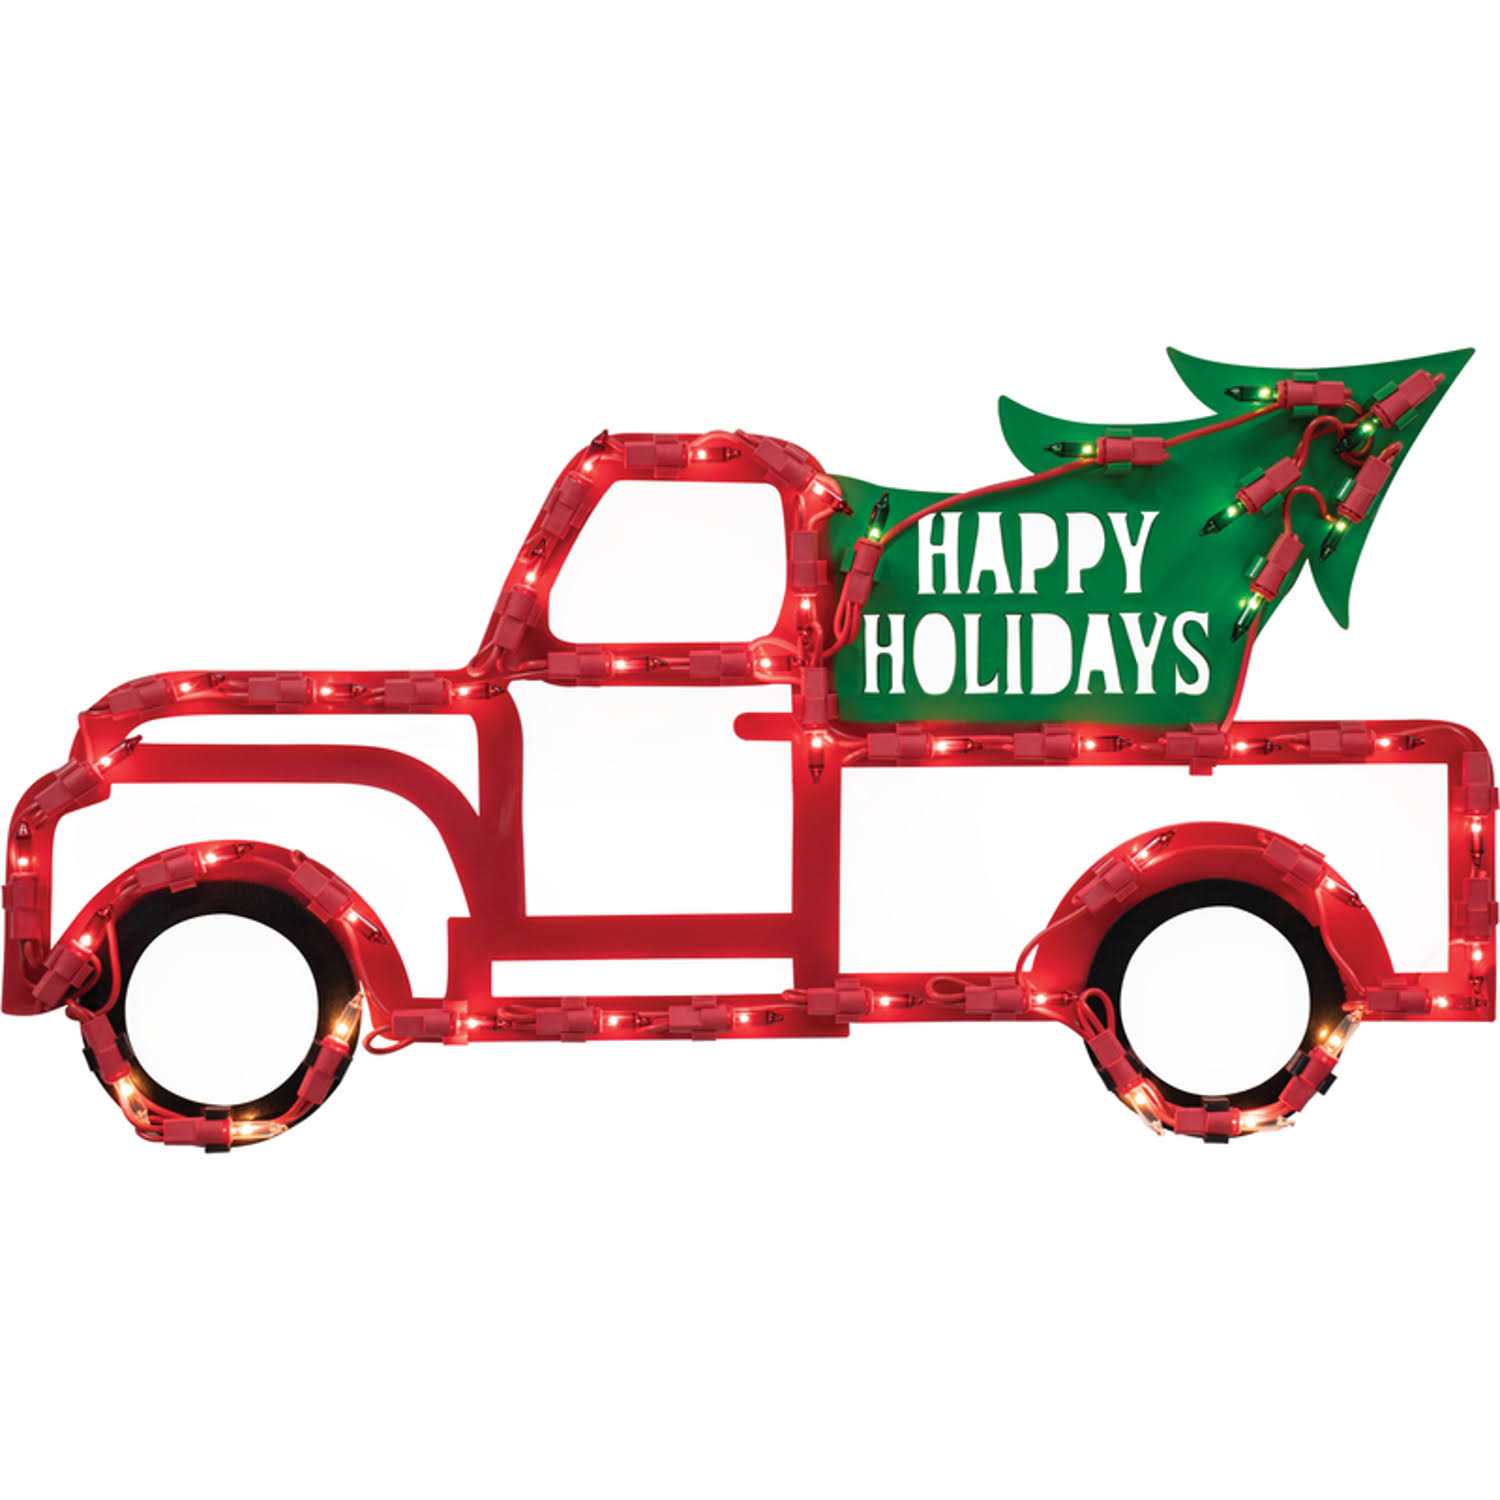 IG Design Truck and Tree Indoor Christmas Decor